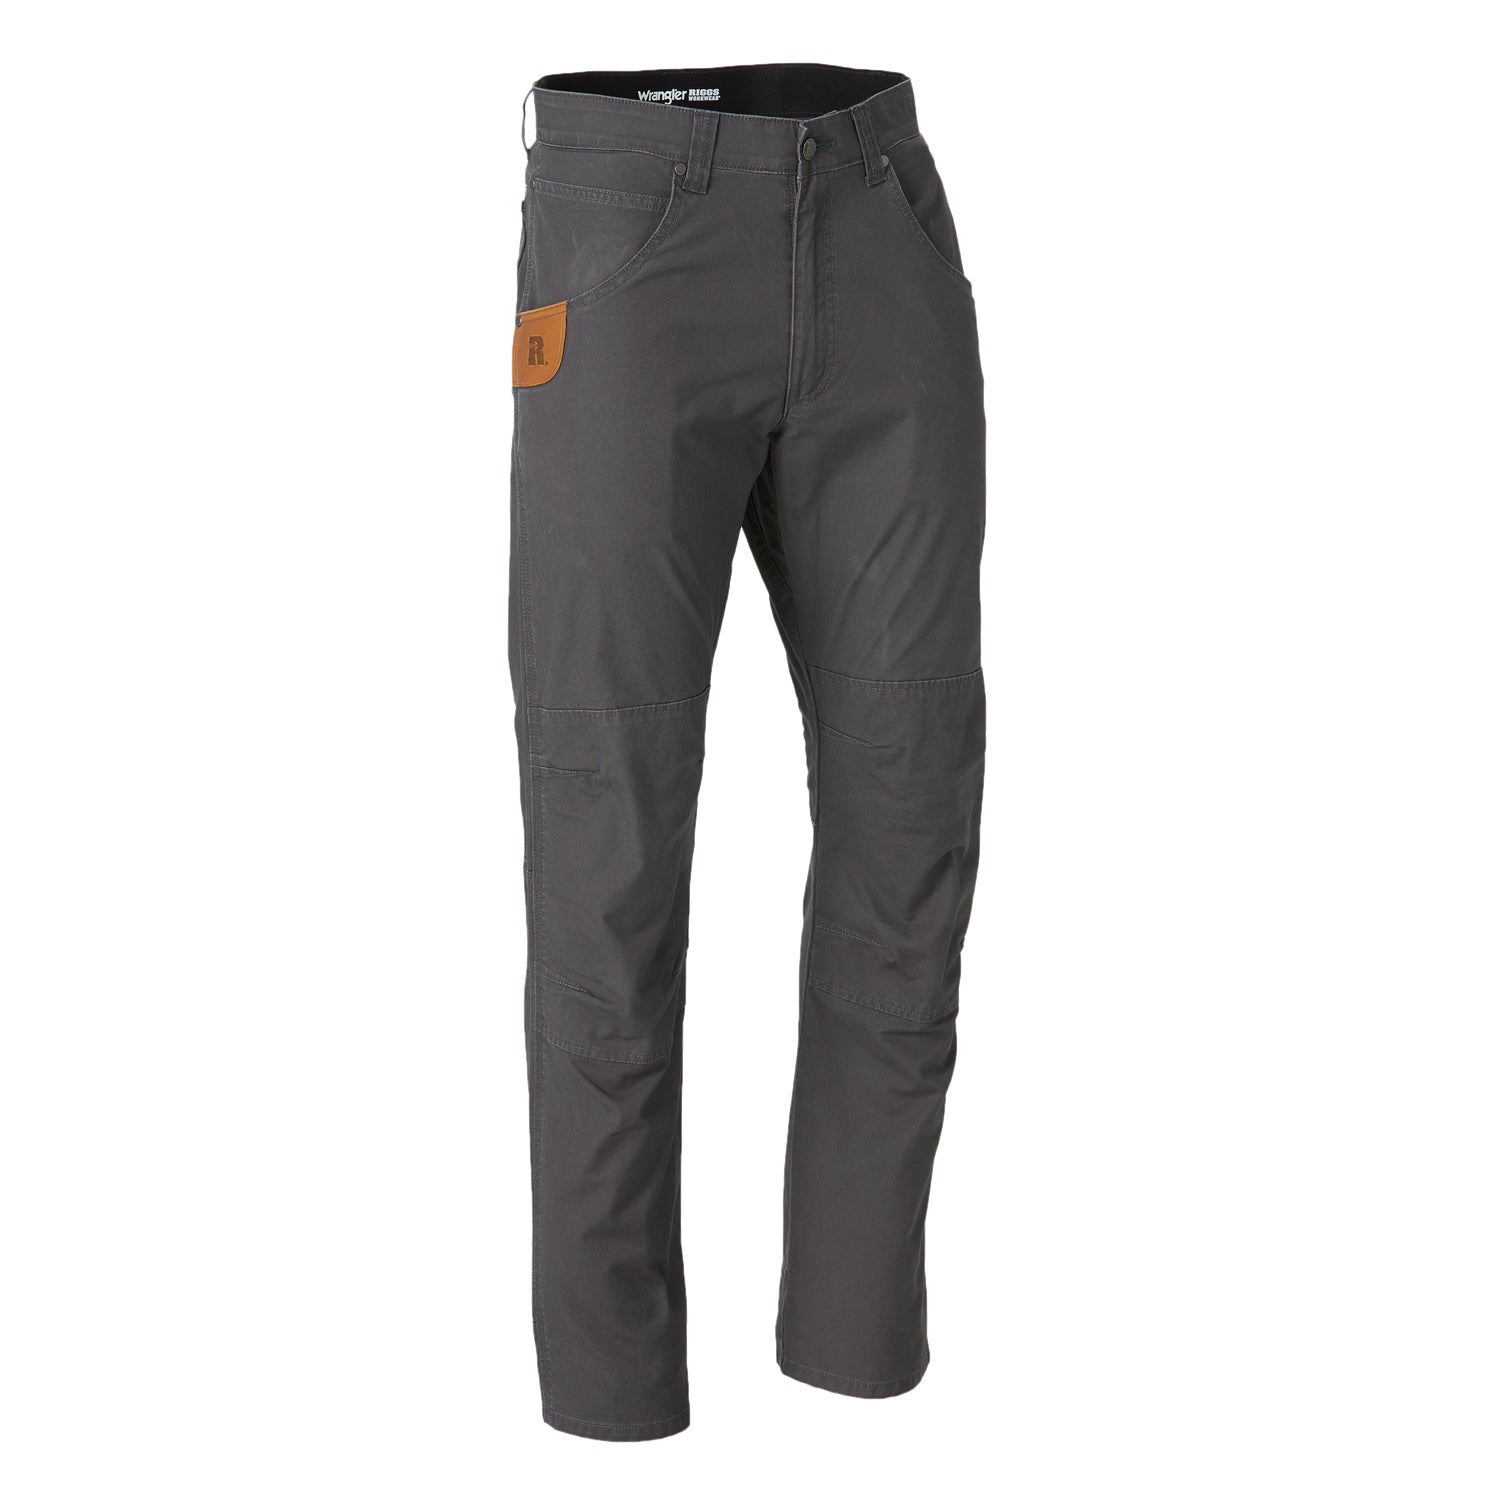 Wholesale Regal Wear Cargo Twill Pants With Belt - Aqua for Sale